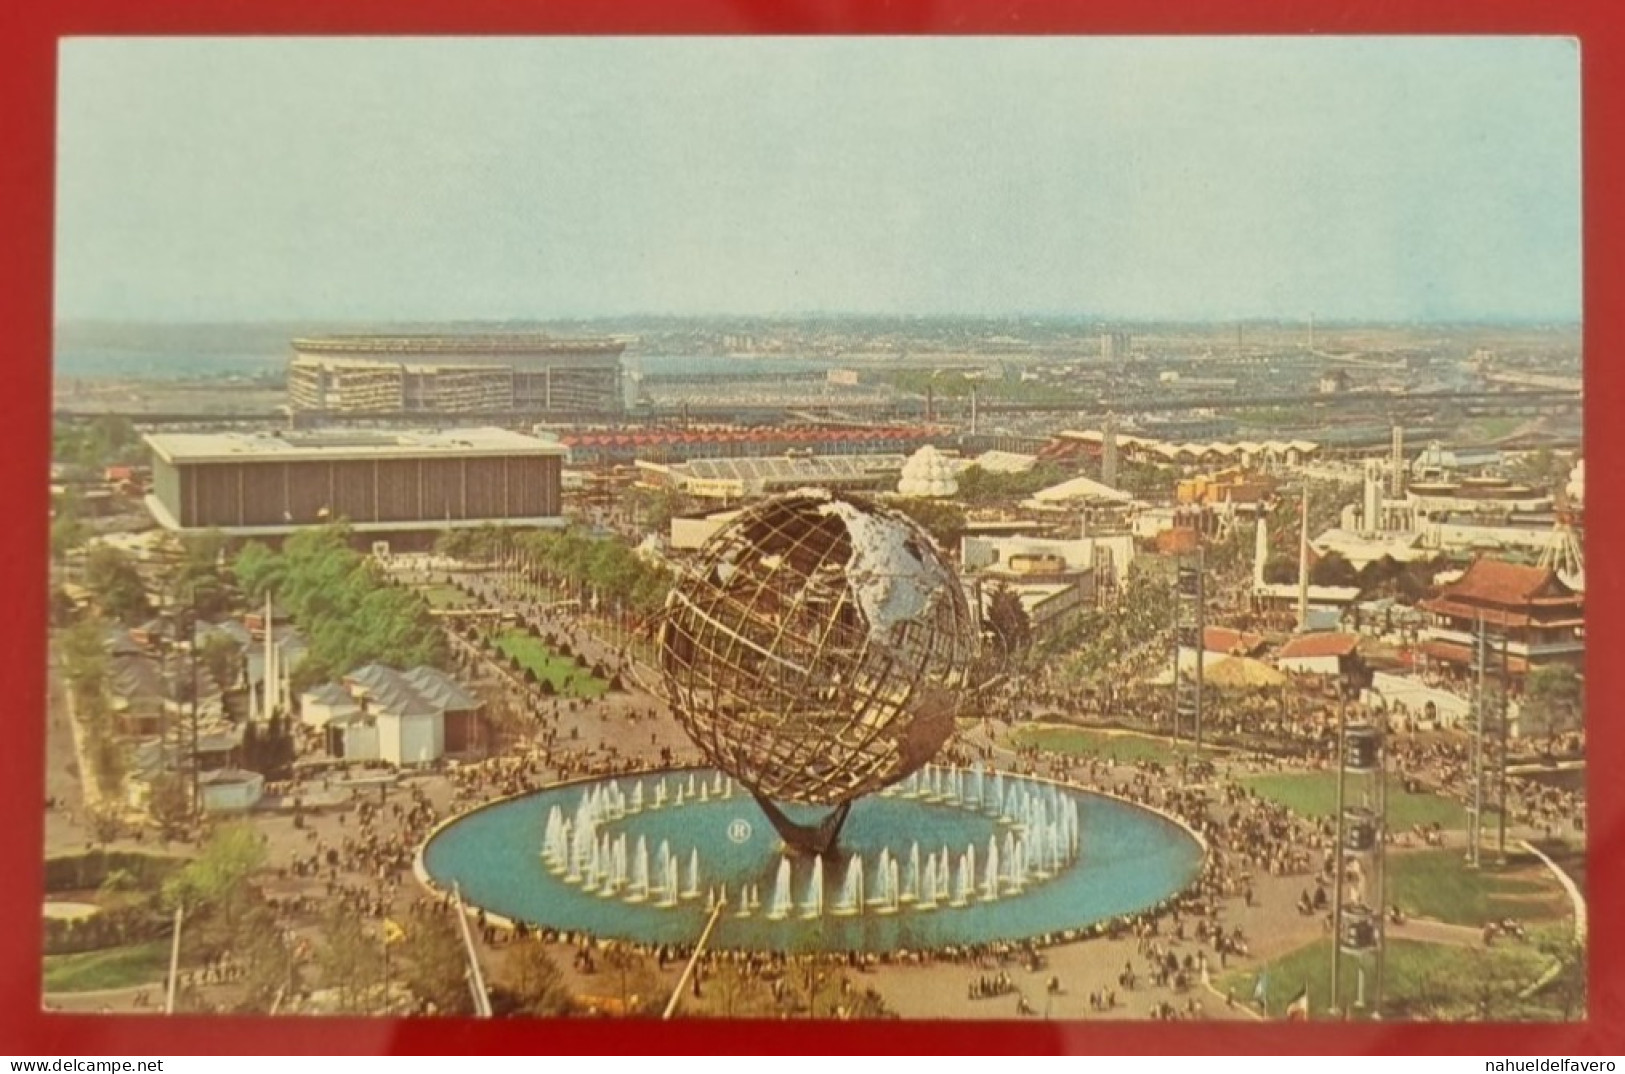 Uncirculated Postcard - USA - NY, NEW YORK WORLD'S FAIR 1964-65 - UNISPHERE - Mostre, Esposizioni